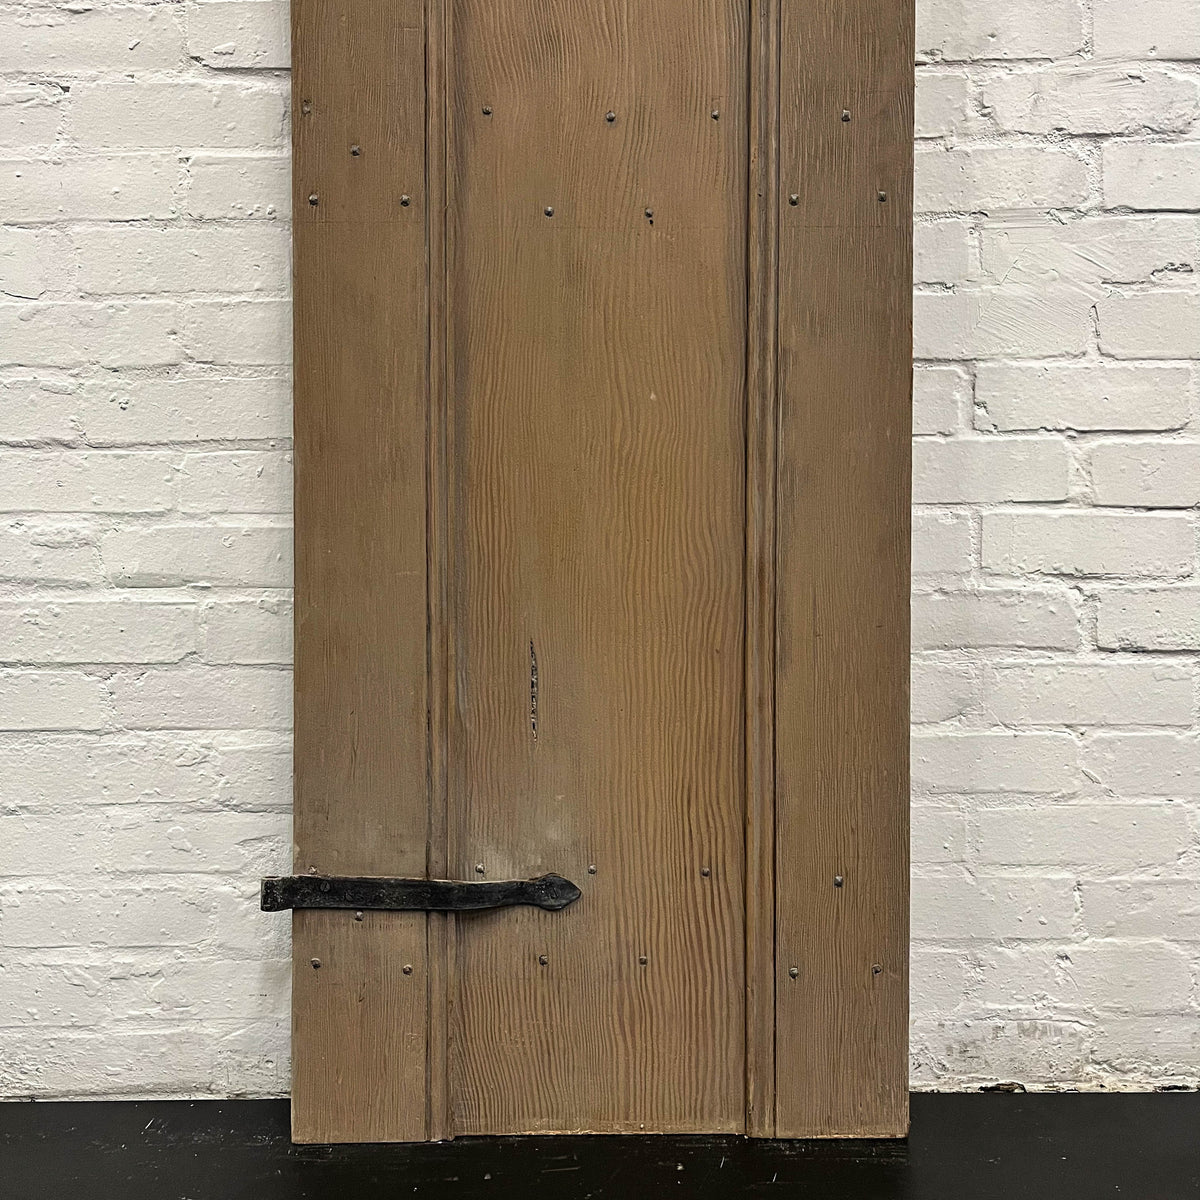 Antique Victorian Pine Latch Door - 186cm x 59cm | The Architectural Forum